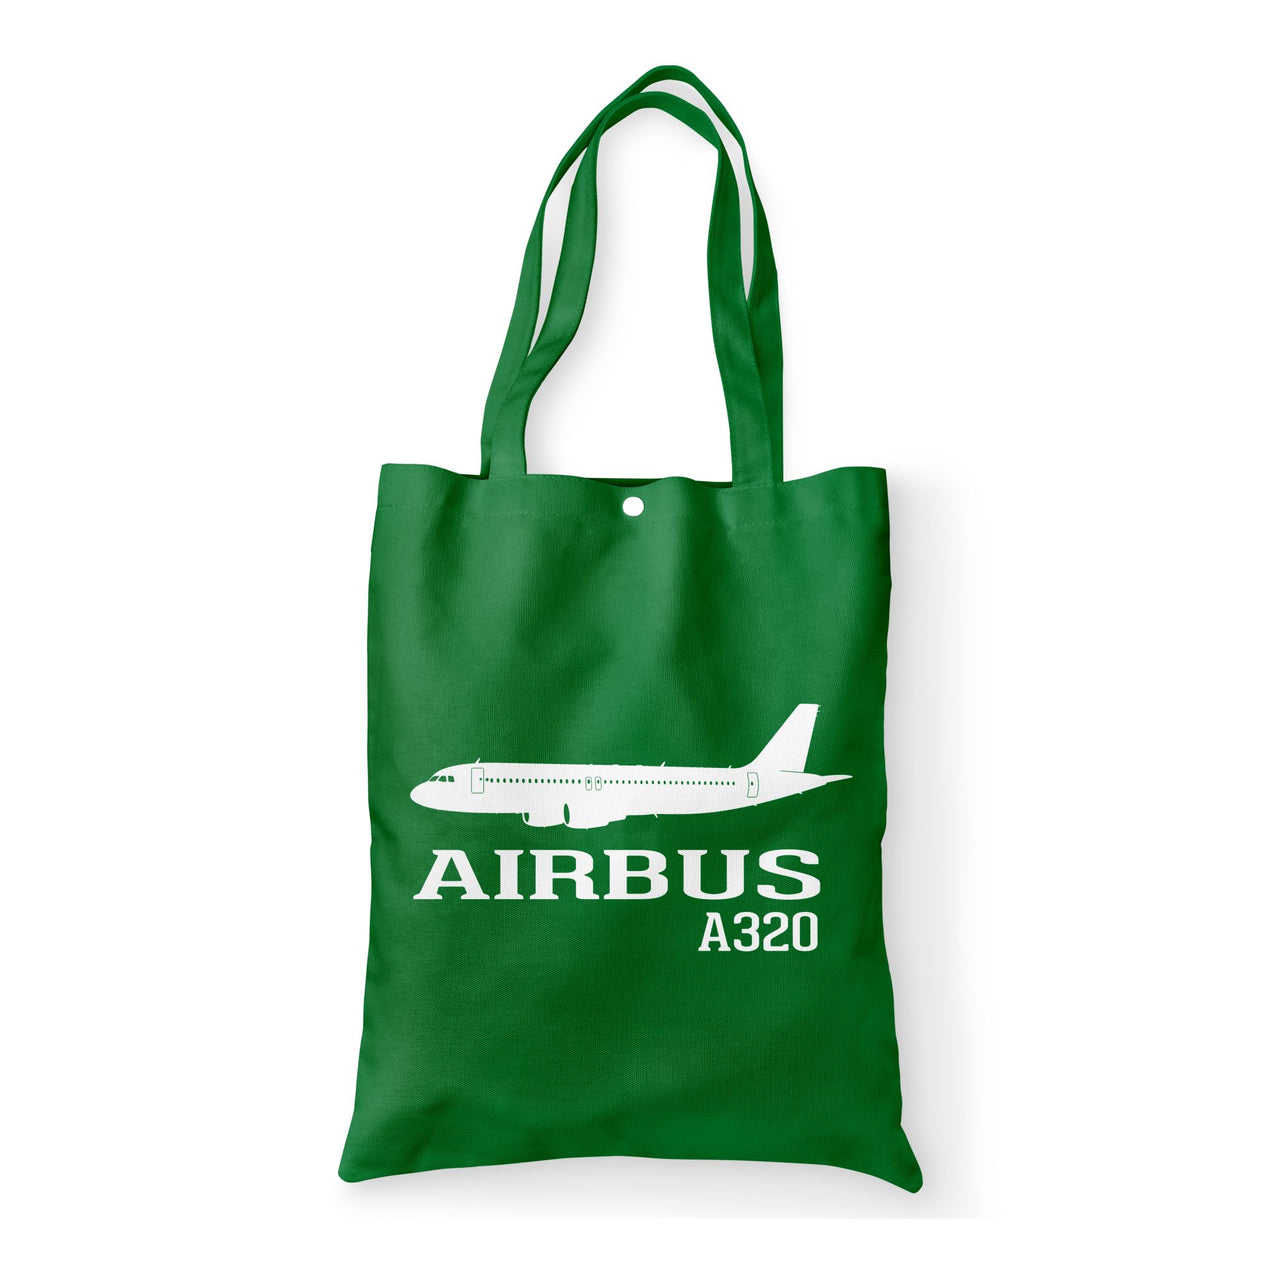 Airbus A320 Printed Designed Tote Bags